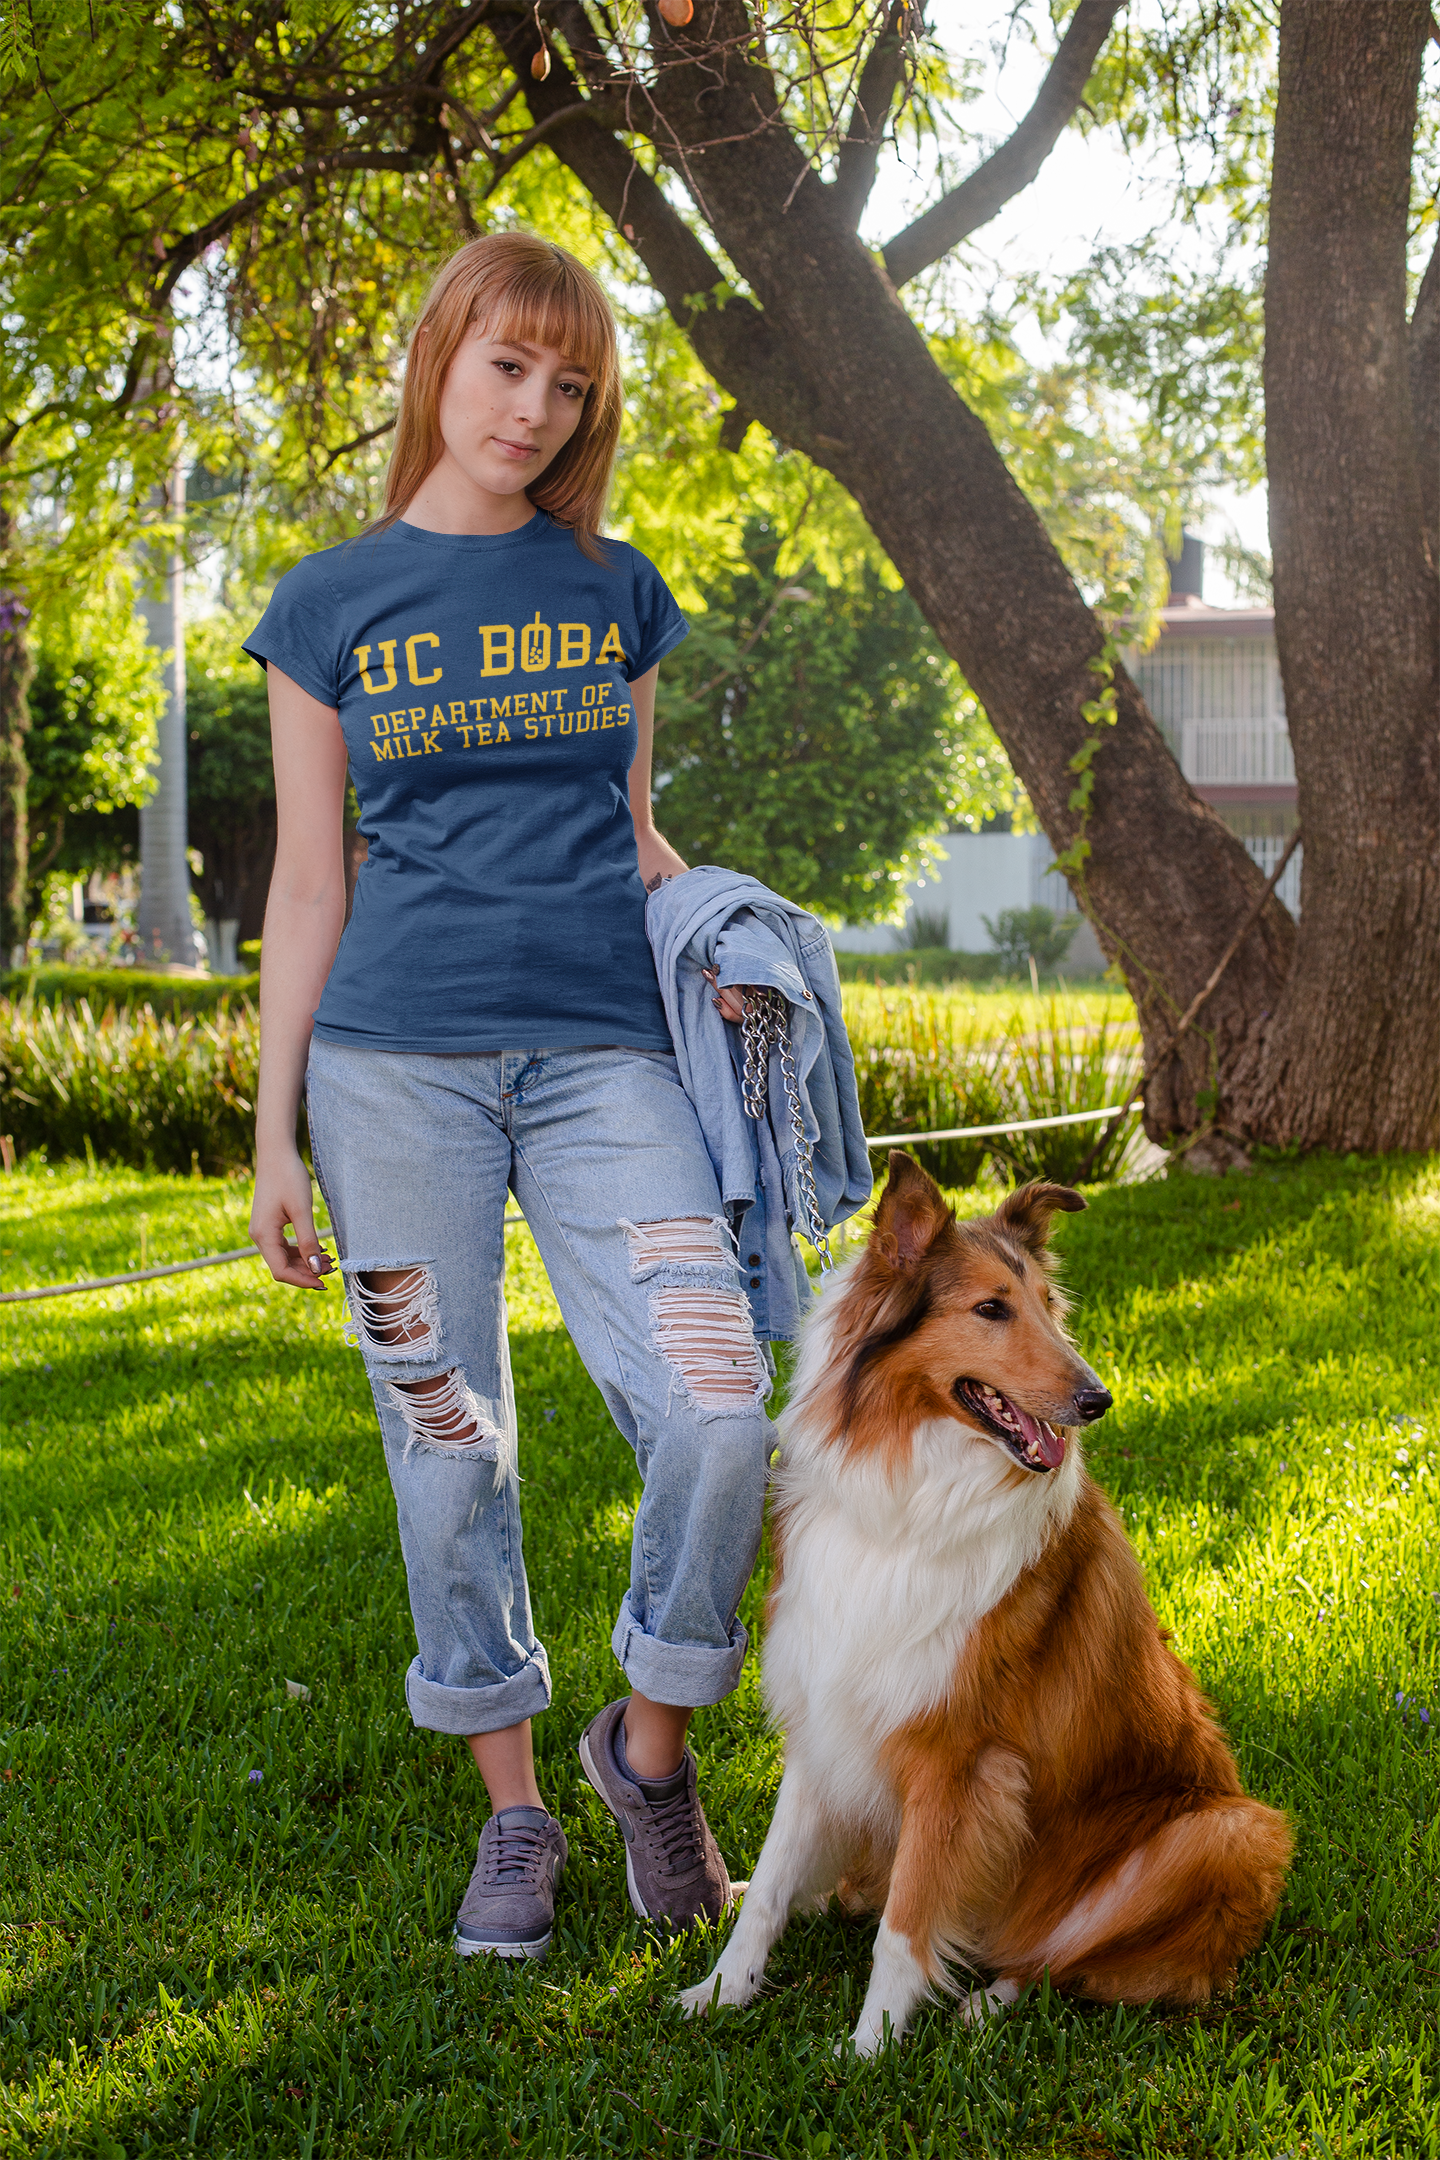 Woman wearing a UC Boba Shirt standing next to a dog